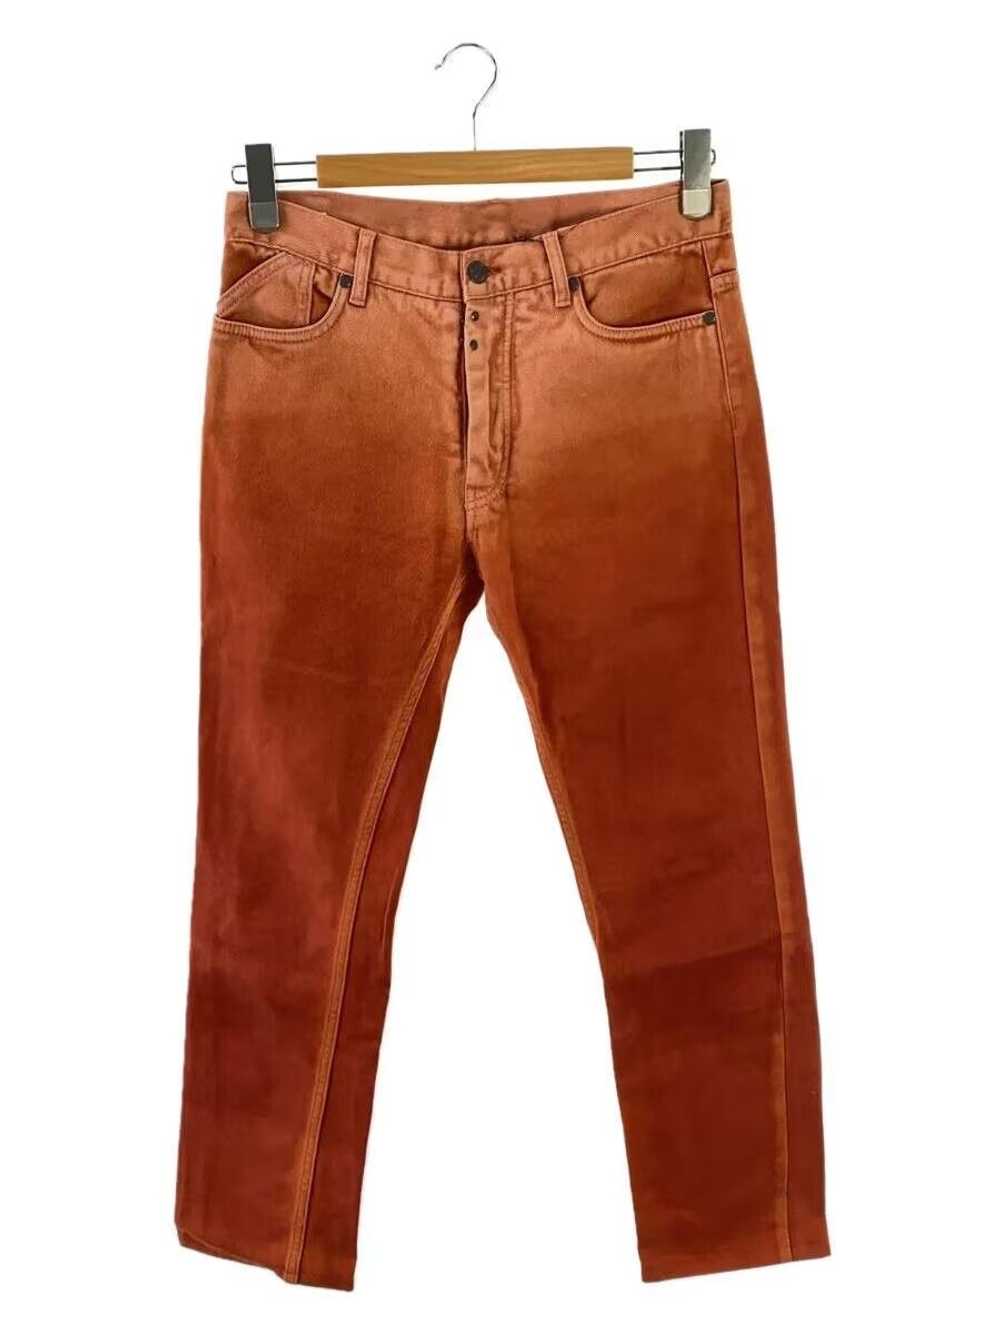 Maison Margiela Faded Two Tone Denim Jeans - image 1